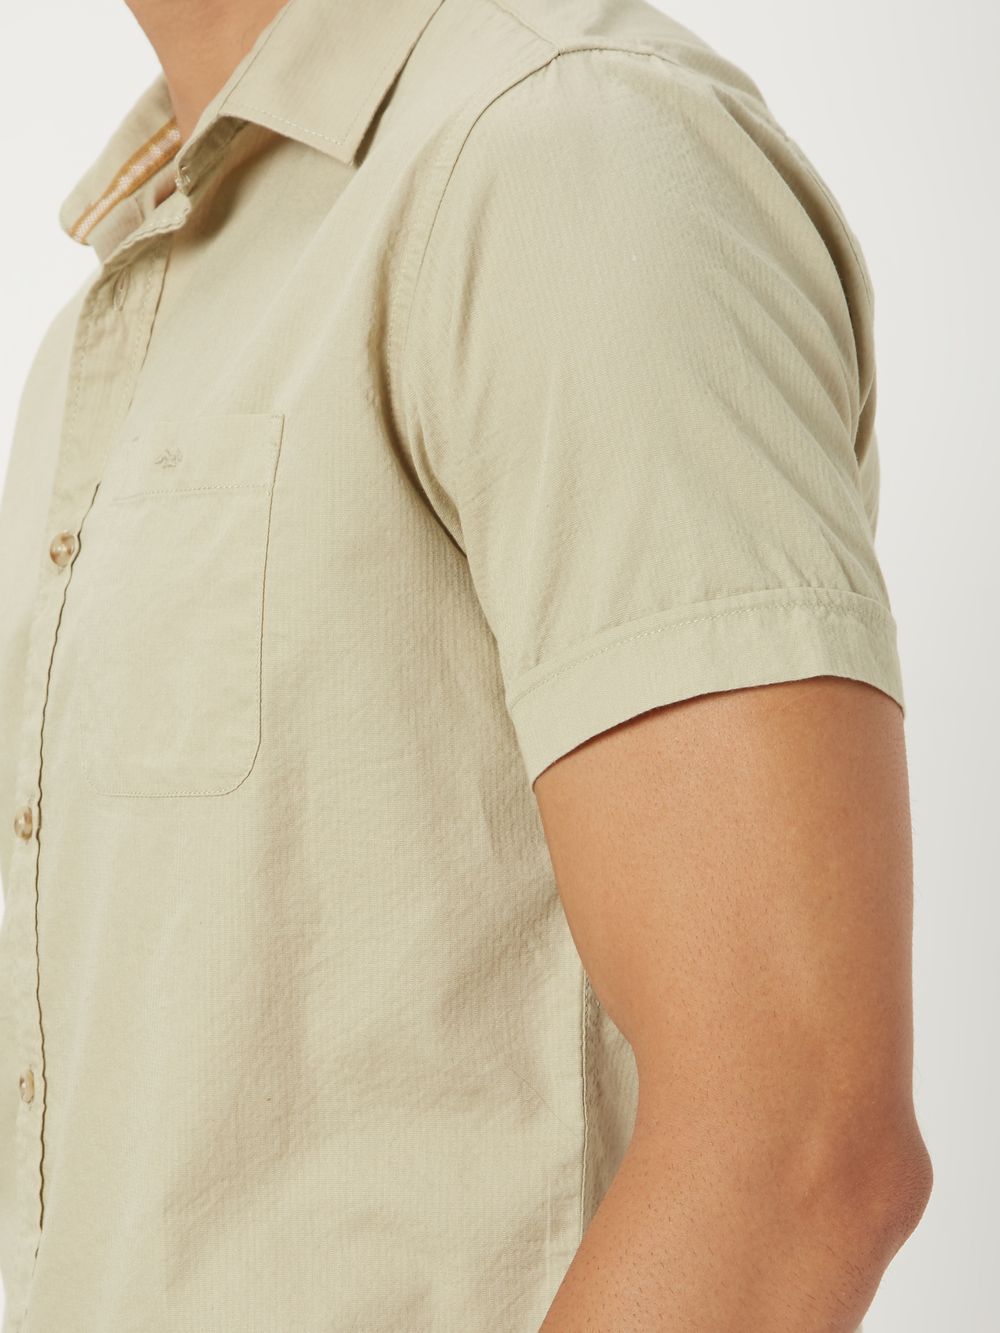 Light Khaki Textured Plain Slim Fit Casual Shirt